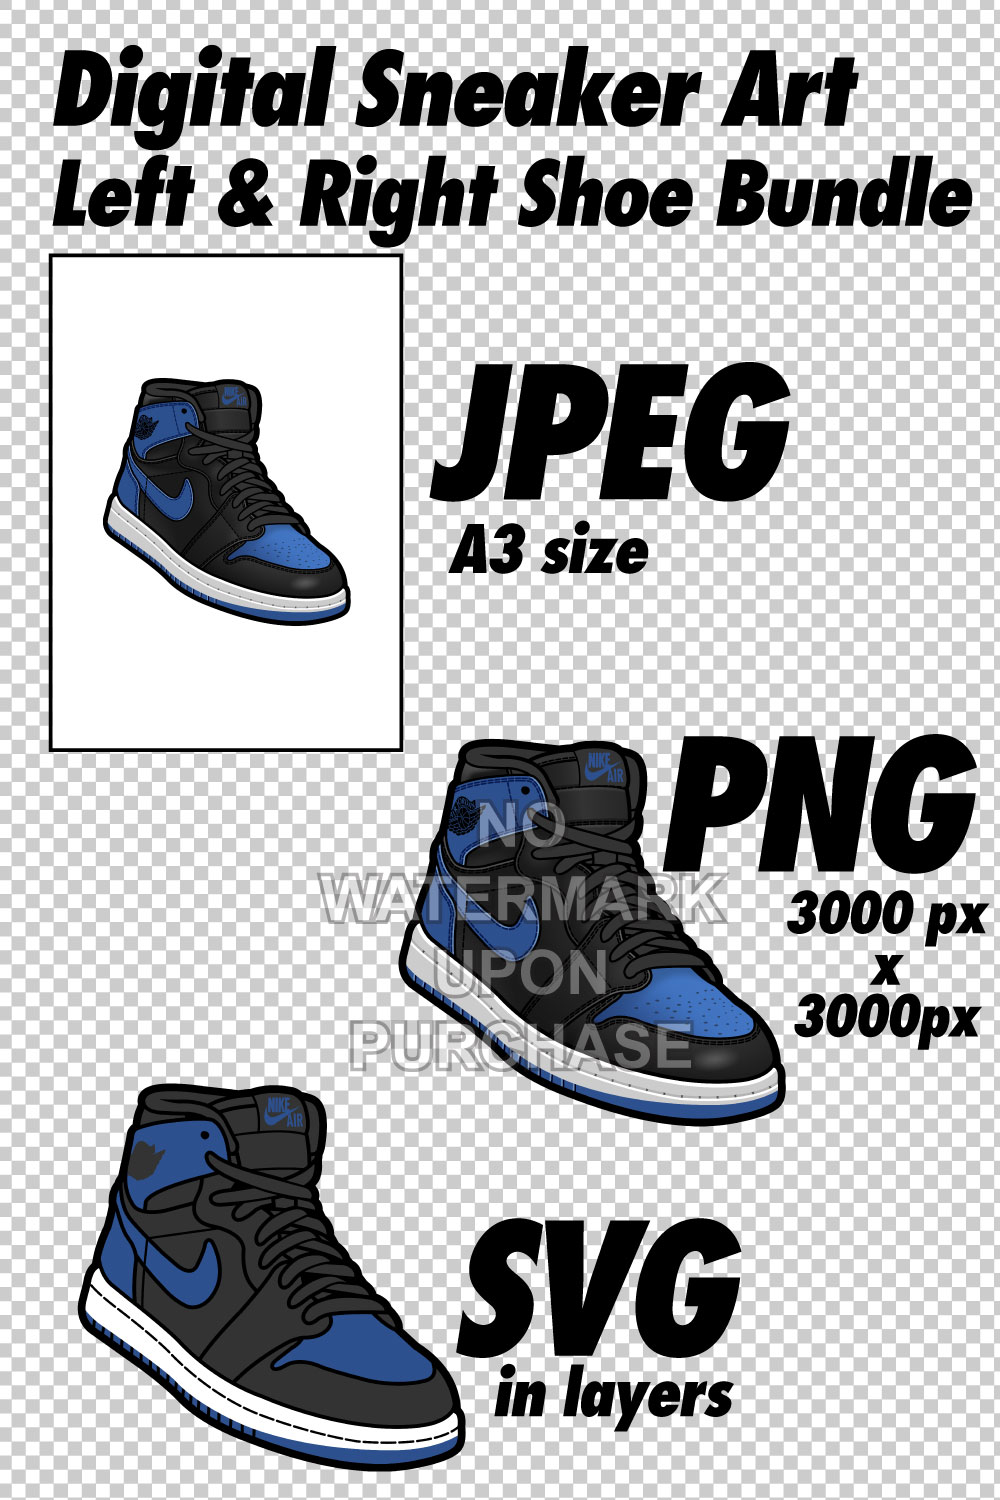 Air Jordan 1 Black Royal JPEG PNG SVG Sneaker Art right & left shoe bundle pinterest preview image.